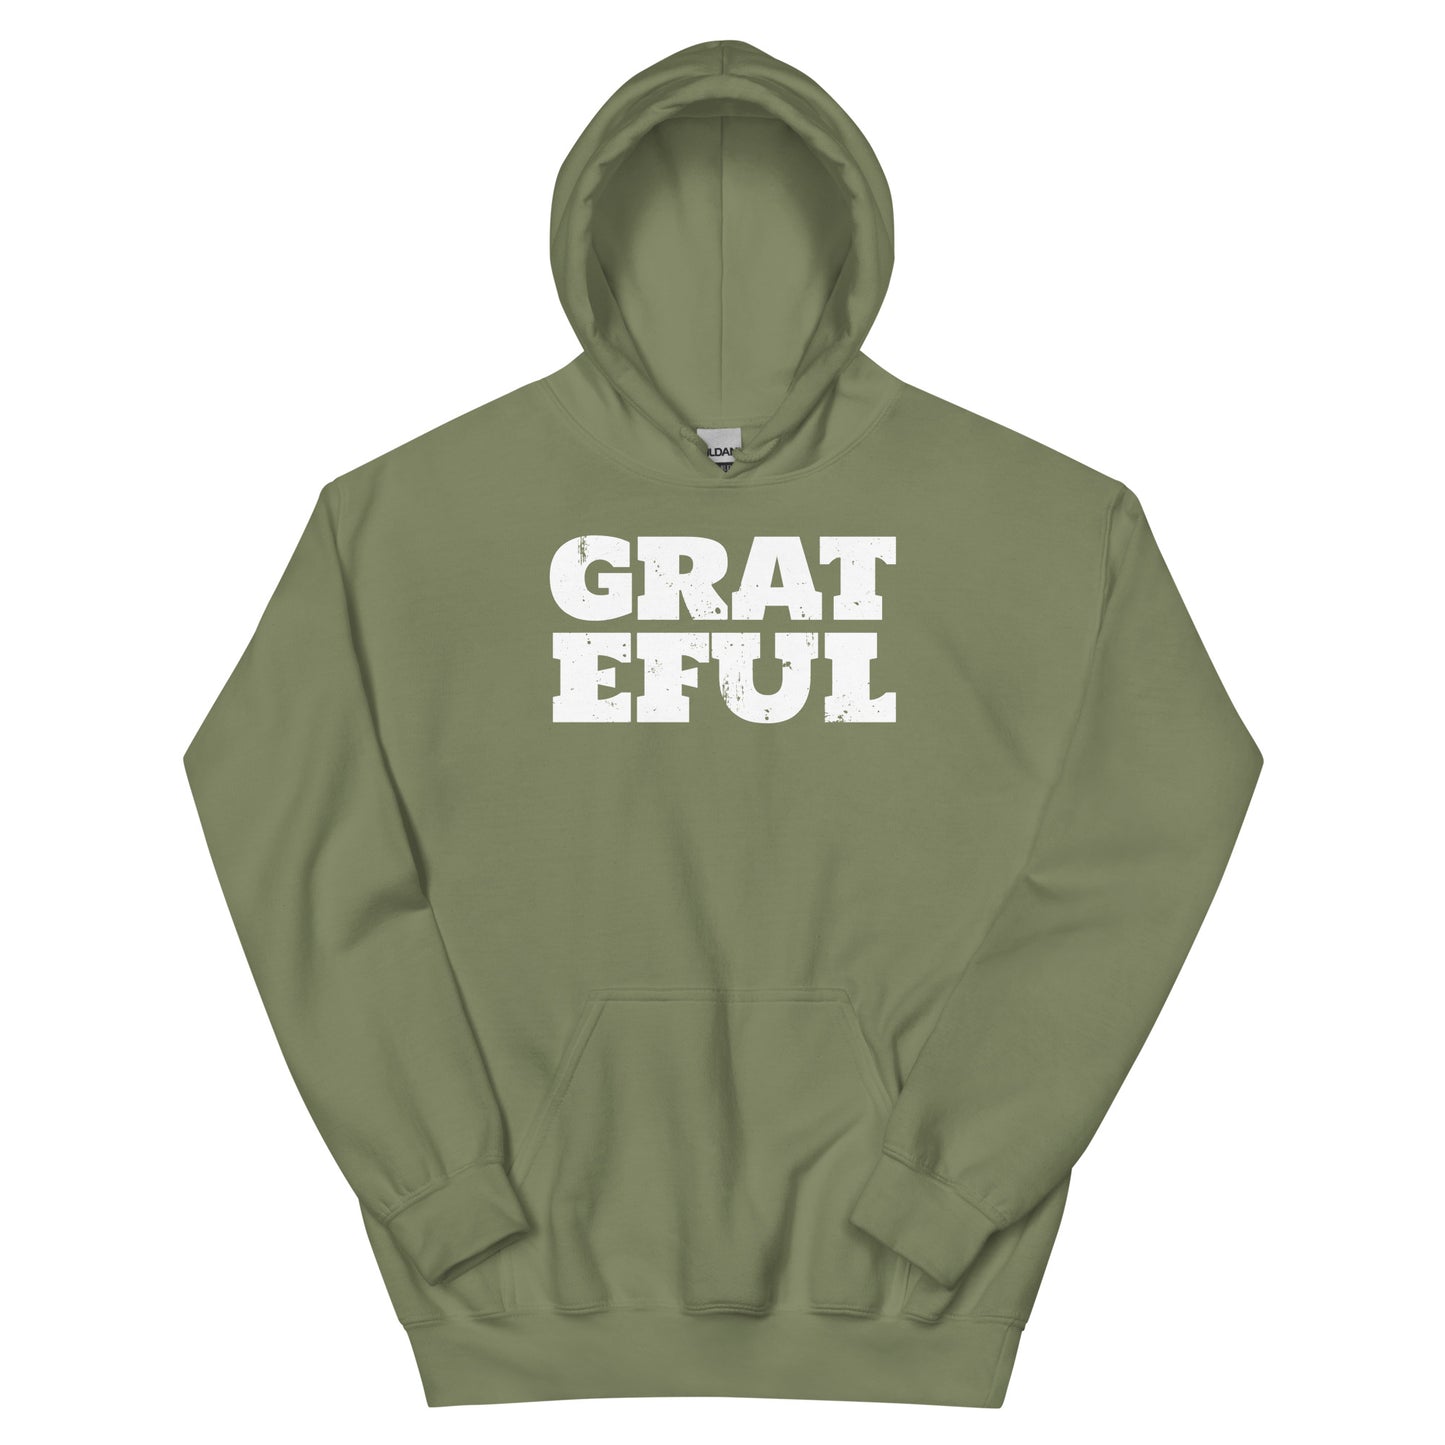 Christian hoodie | Grateful | Military green